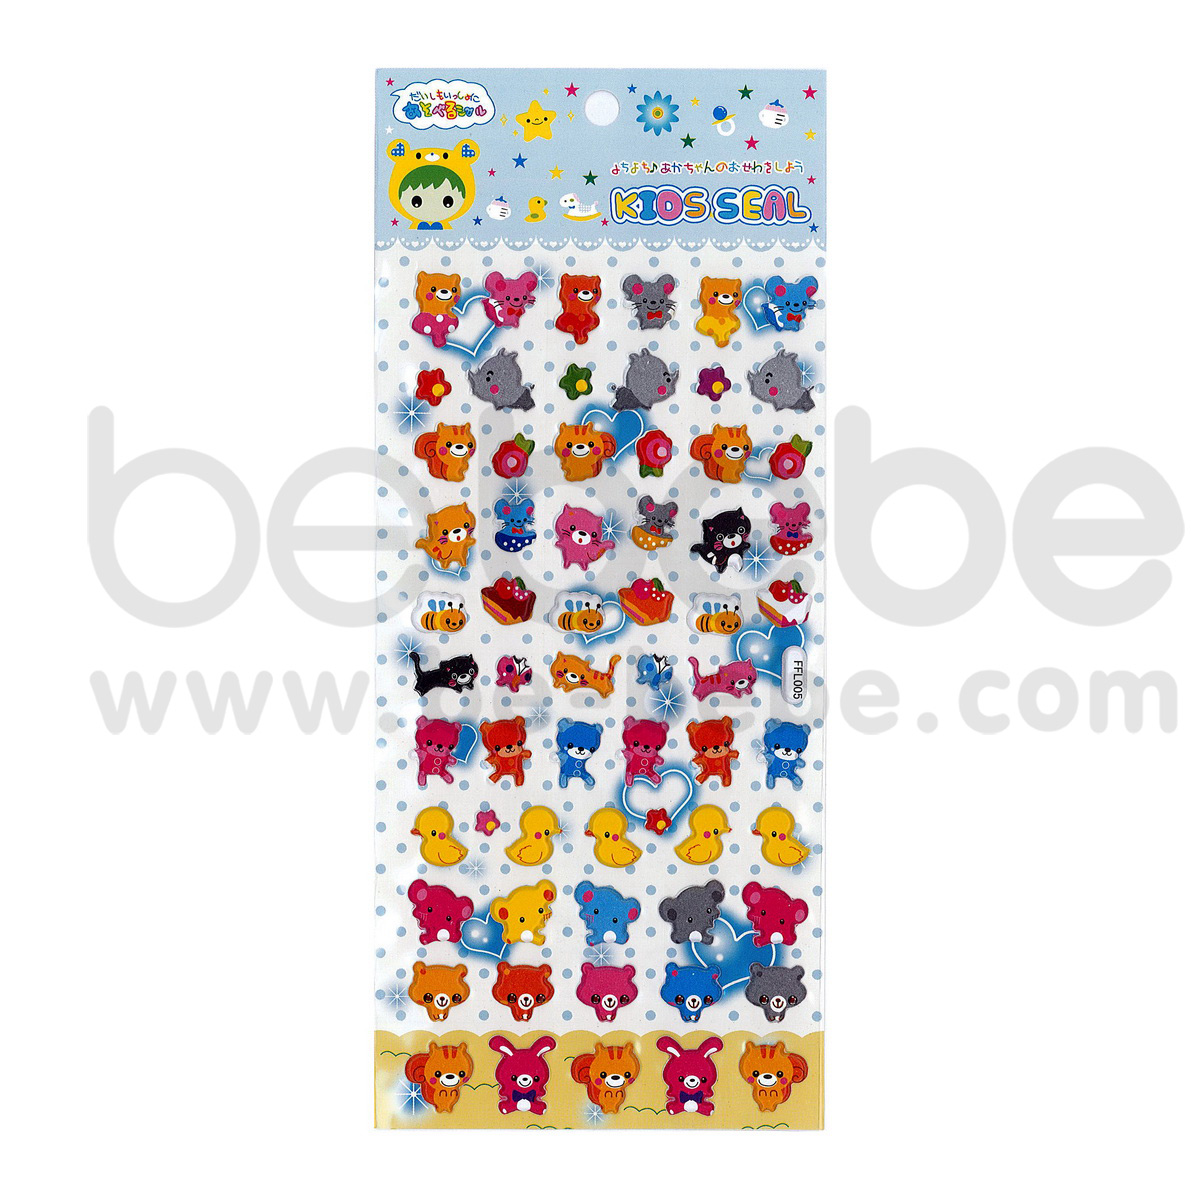 be bebe : Puffy Sticker (8.5x17cm.) / FFL-005